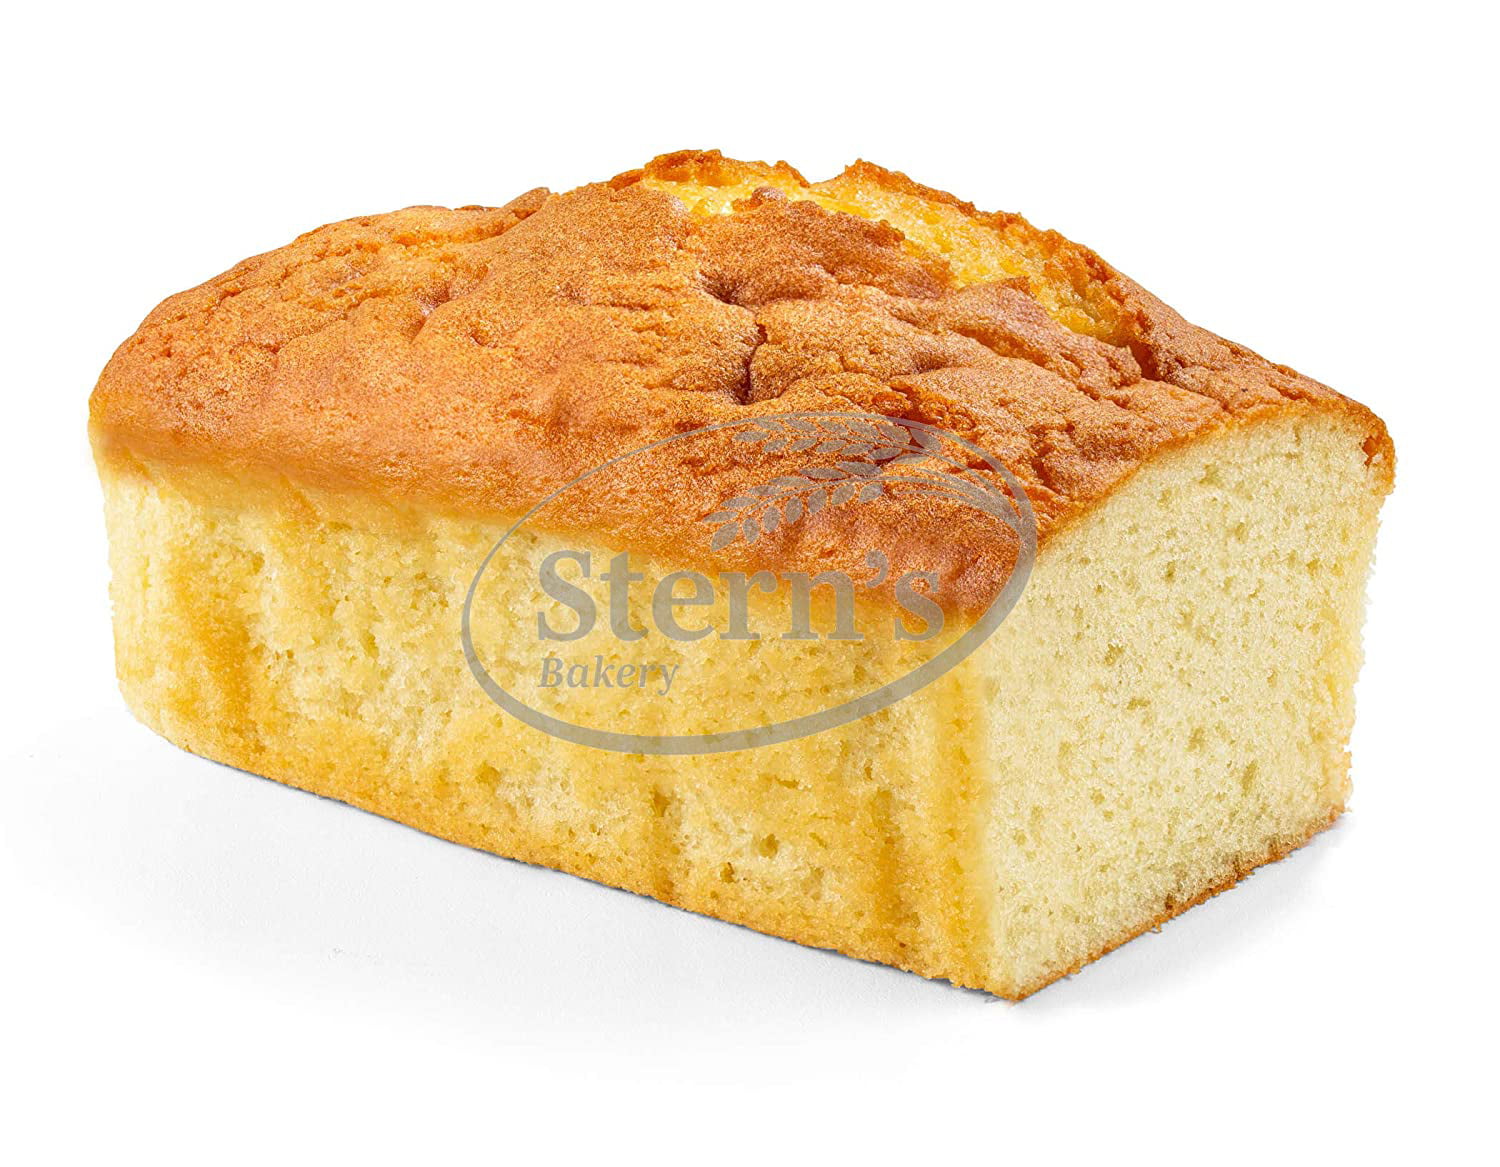 Mocha Cake - Yellow Sponge Cake with Coffee Buttercream Frosting - Walmart .com